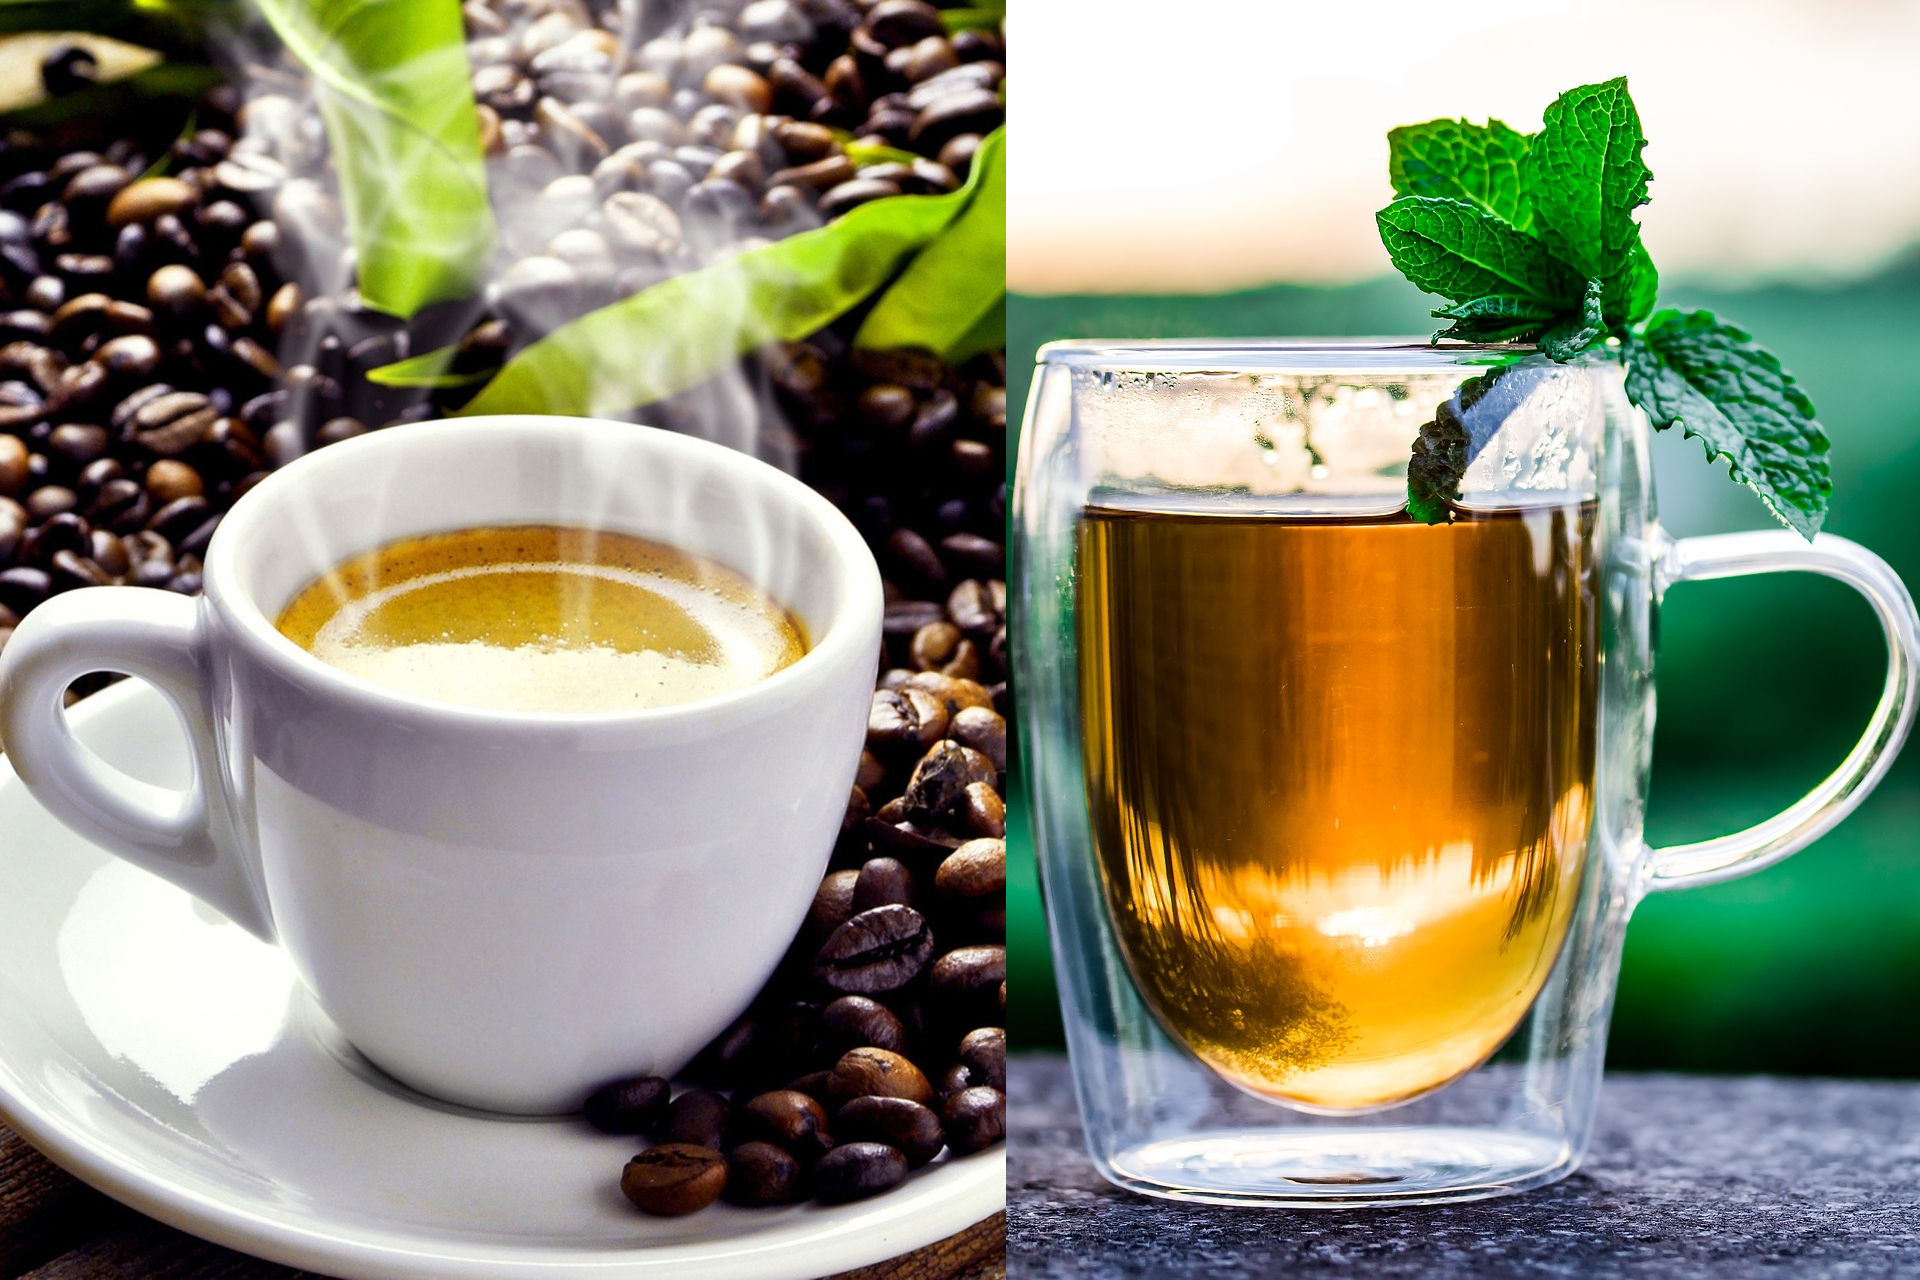 black tea vs coffee caffeine content